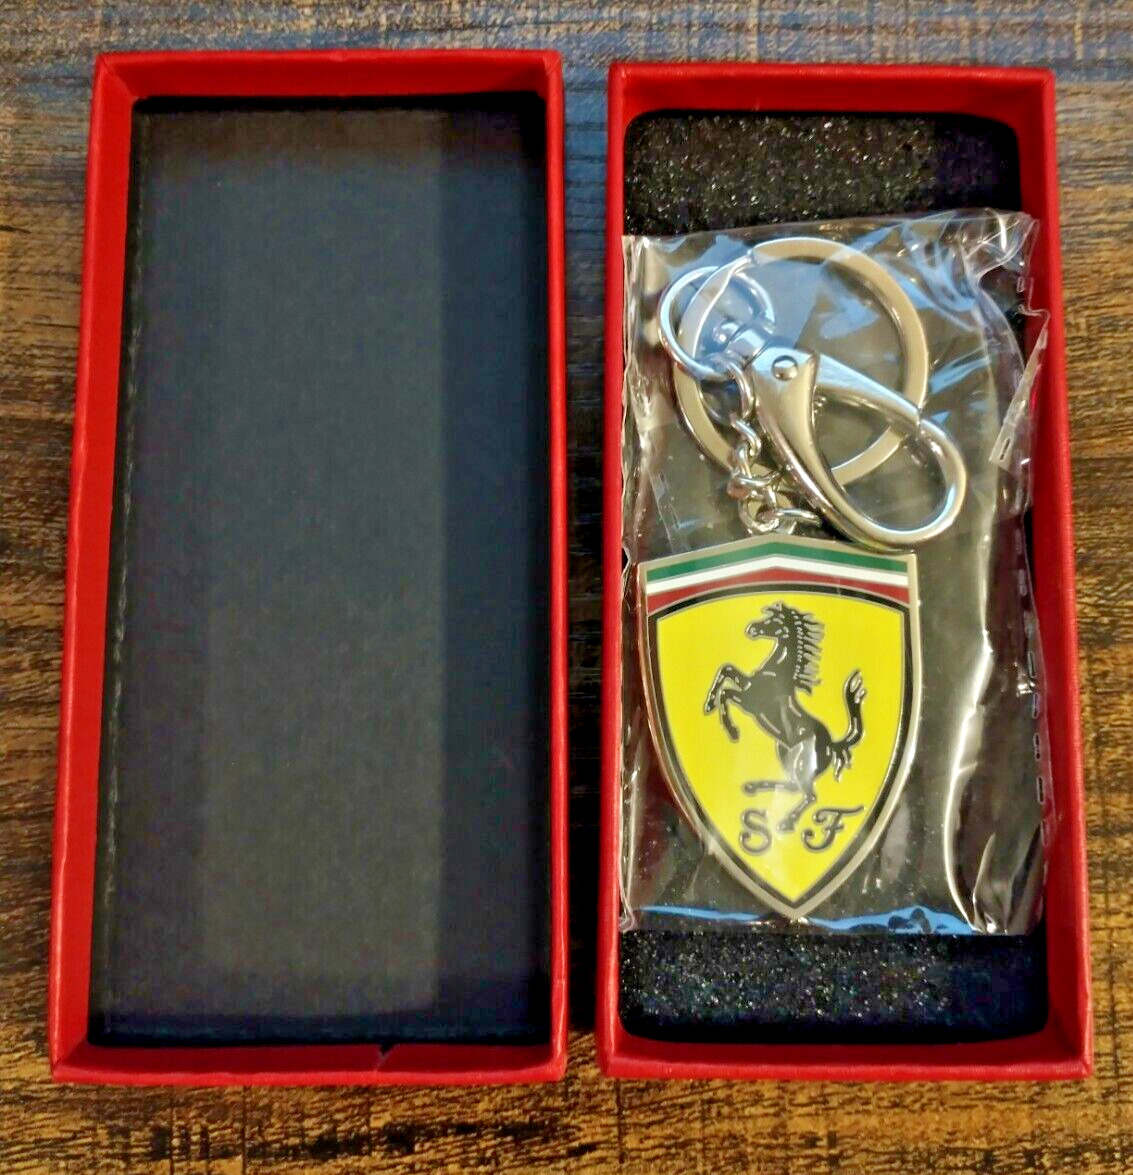 Scuderia Ferrari F1 Racing Shield Metal Key Ring / Keychain with Carabiner Clip